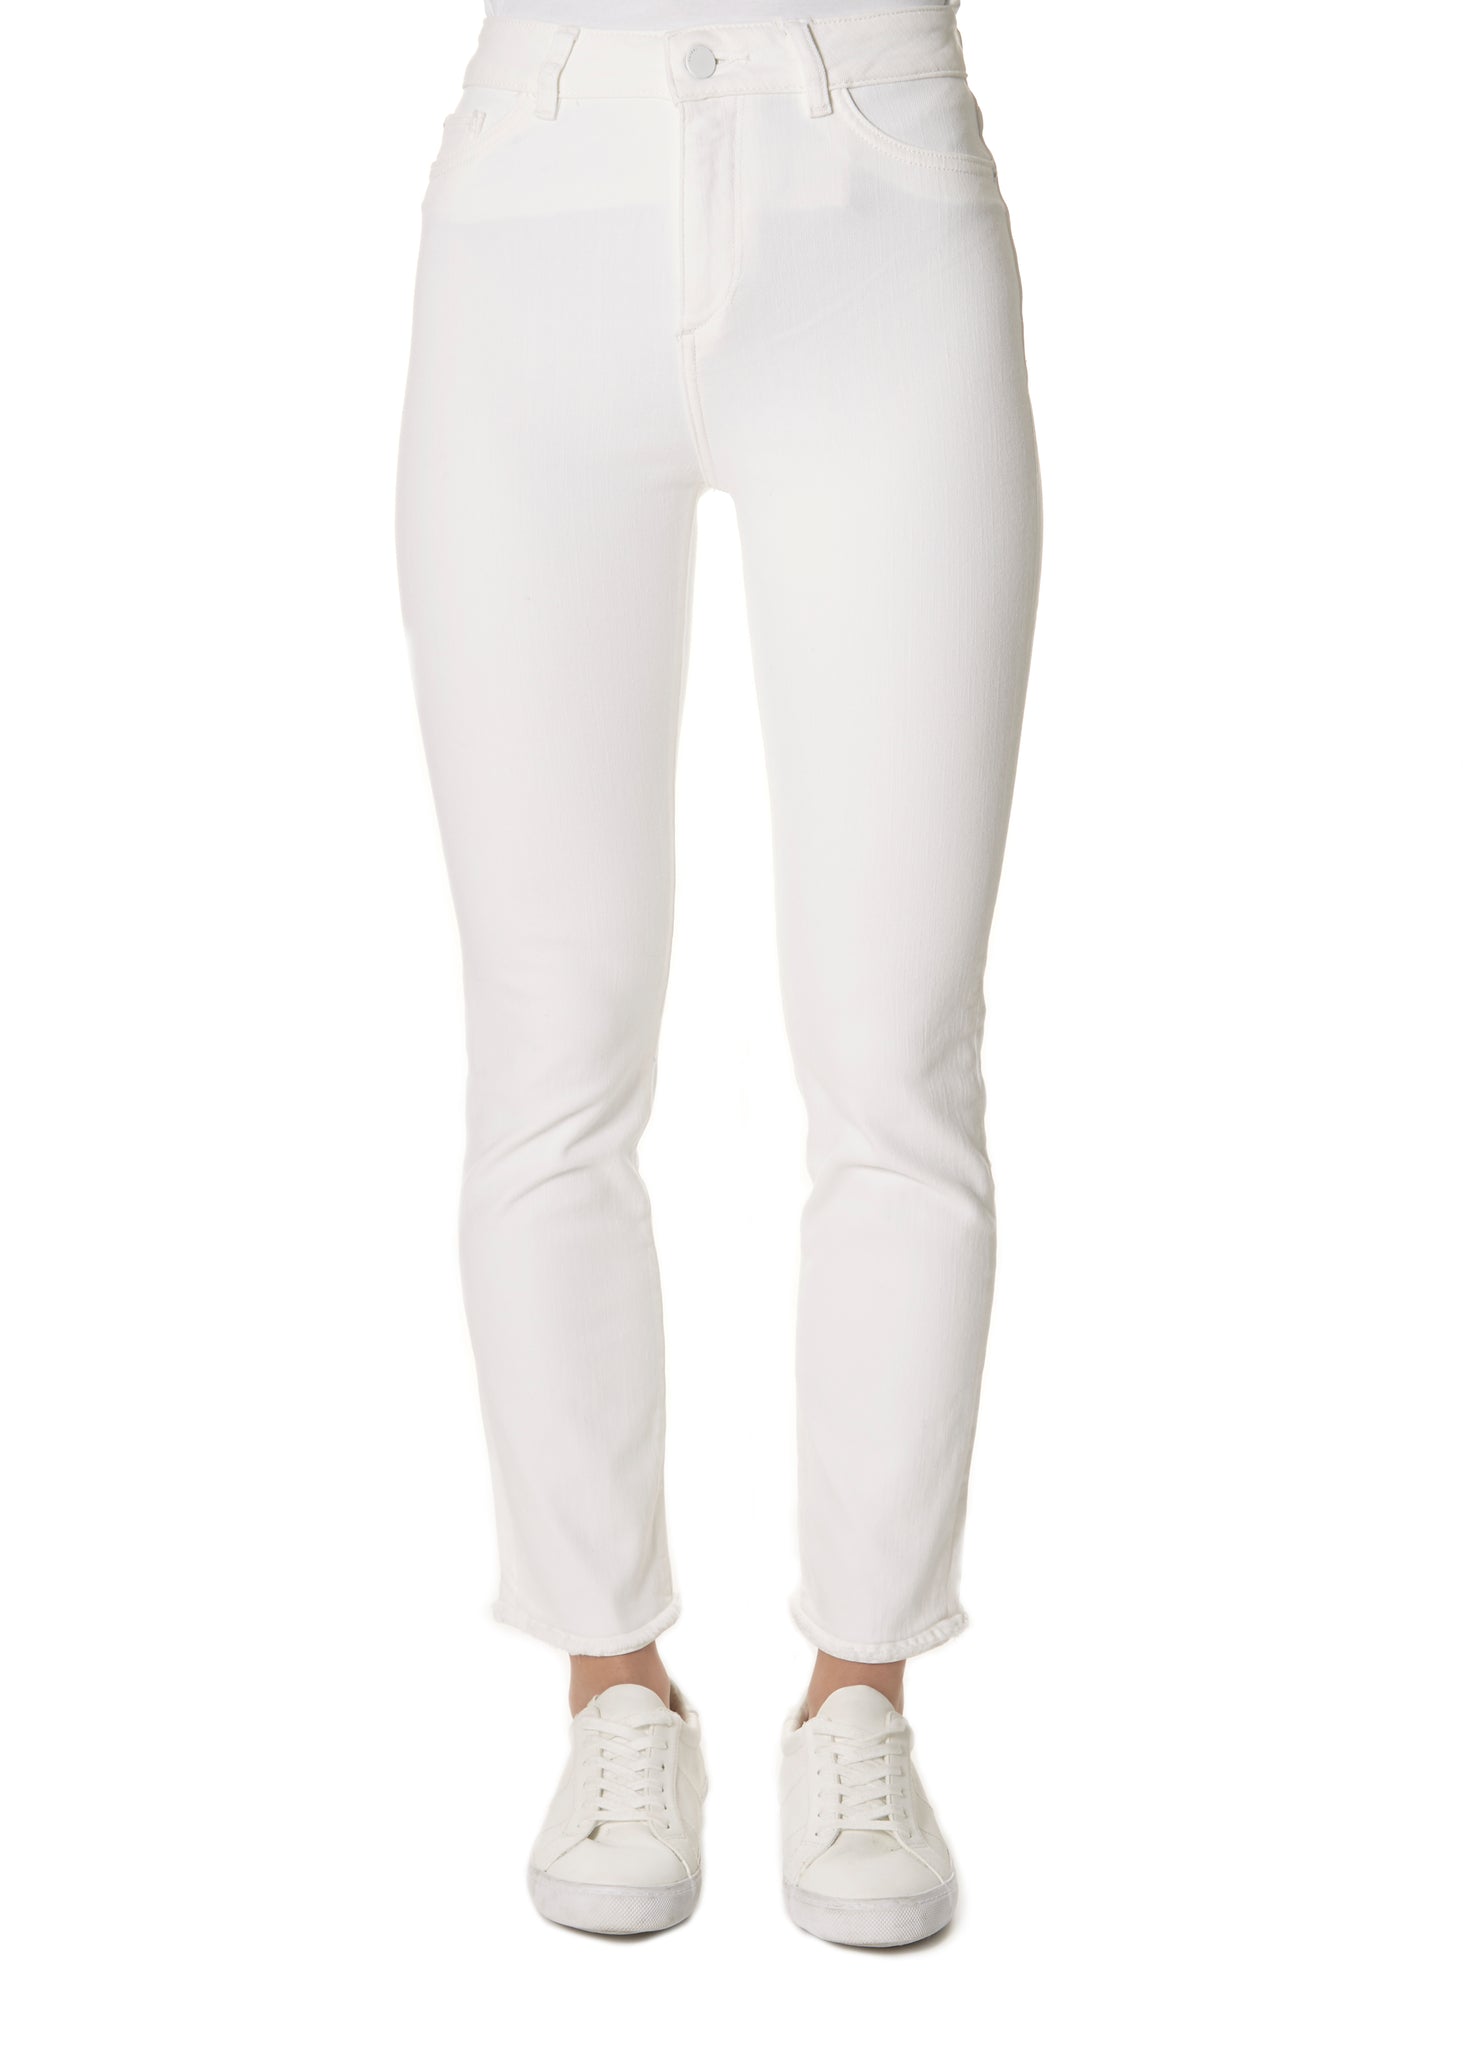 'Mara' Cropped White Jeans - Jessimara